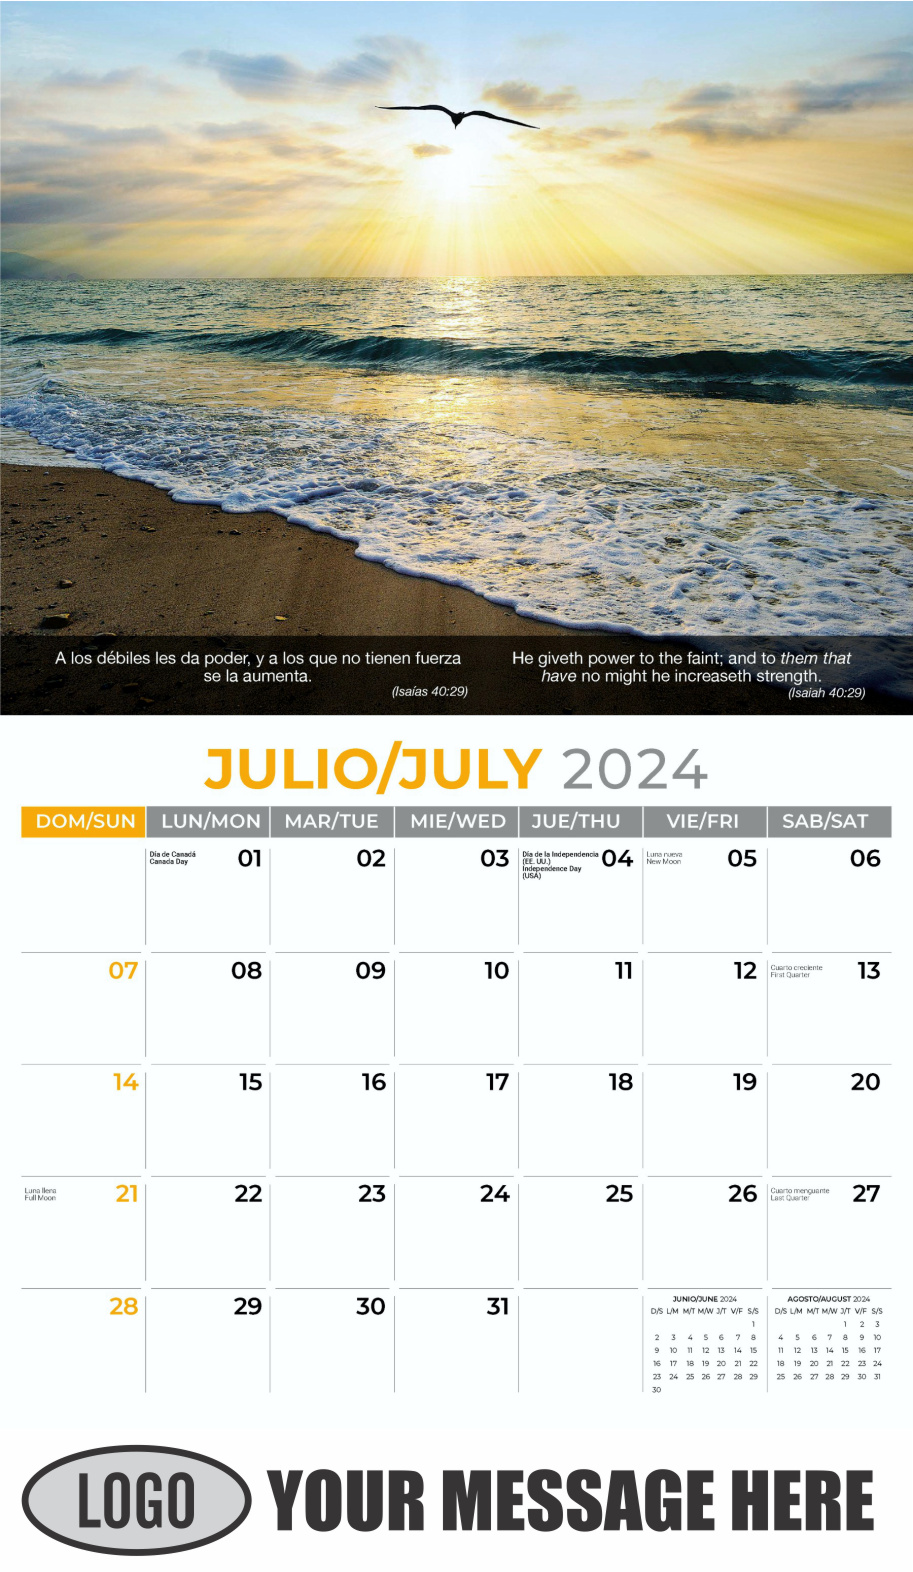 Faith Passages 2024 Bilingual Christian Faith Business Promotional Calendar - July